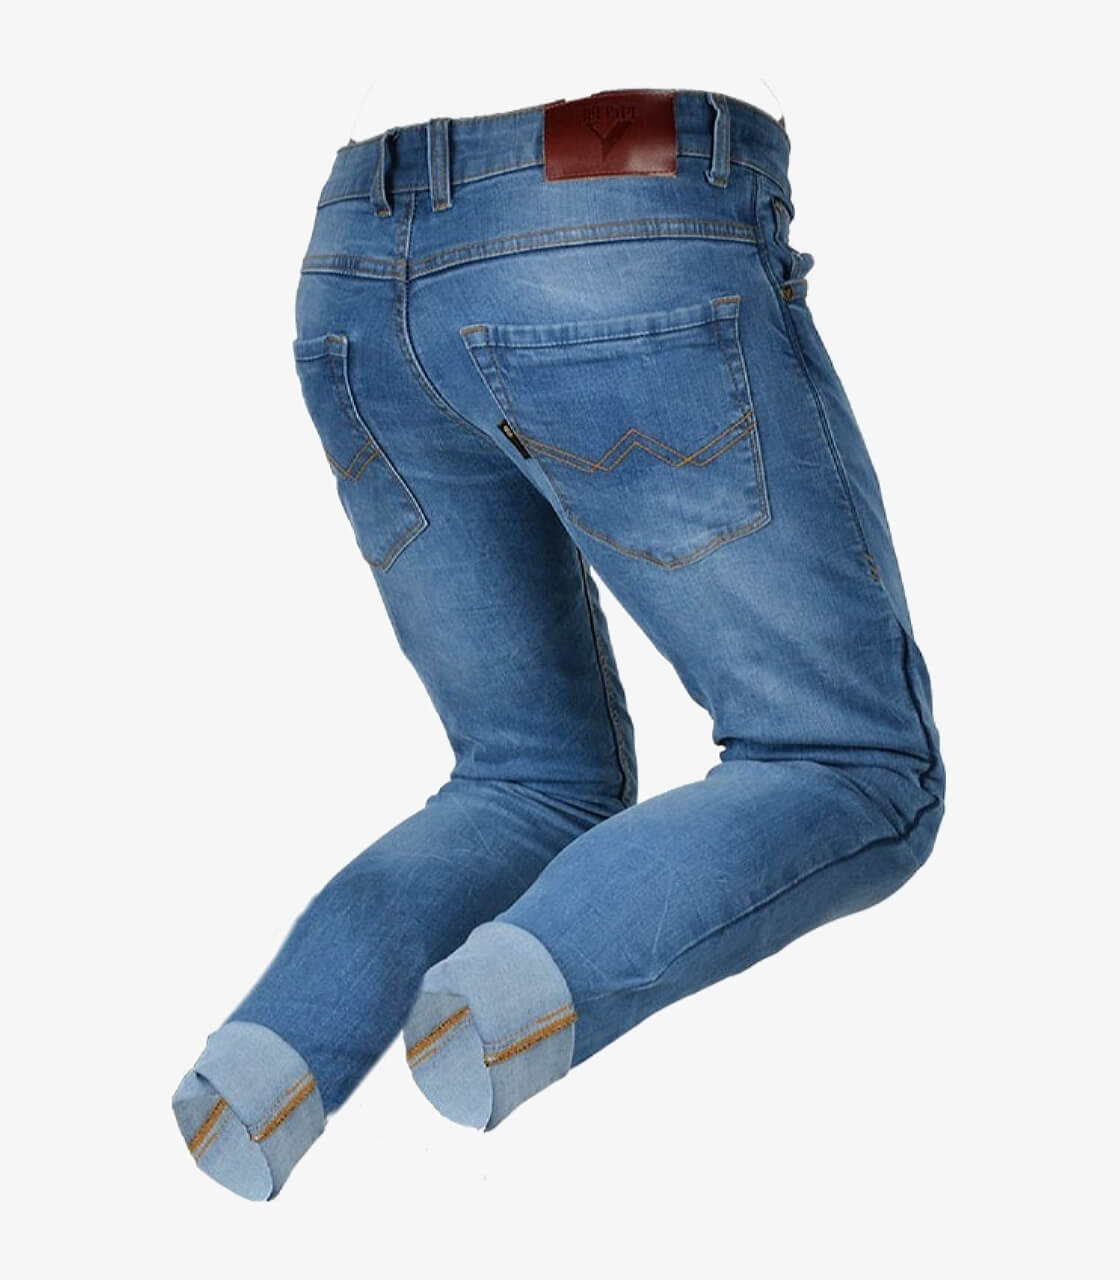 Pantalones tejanos de Hombre By City Camaleon azul tejano